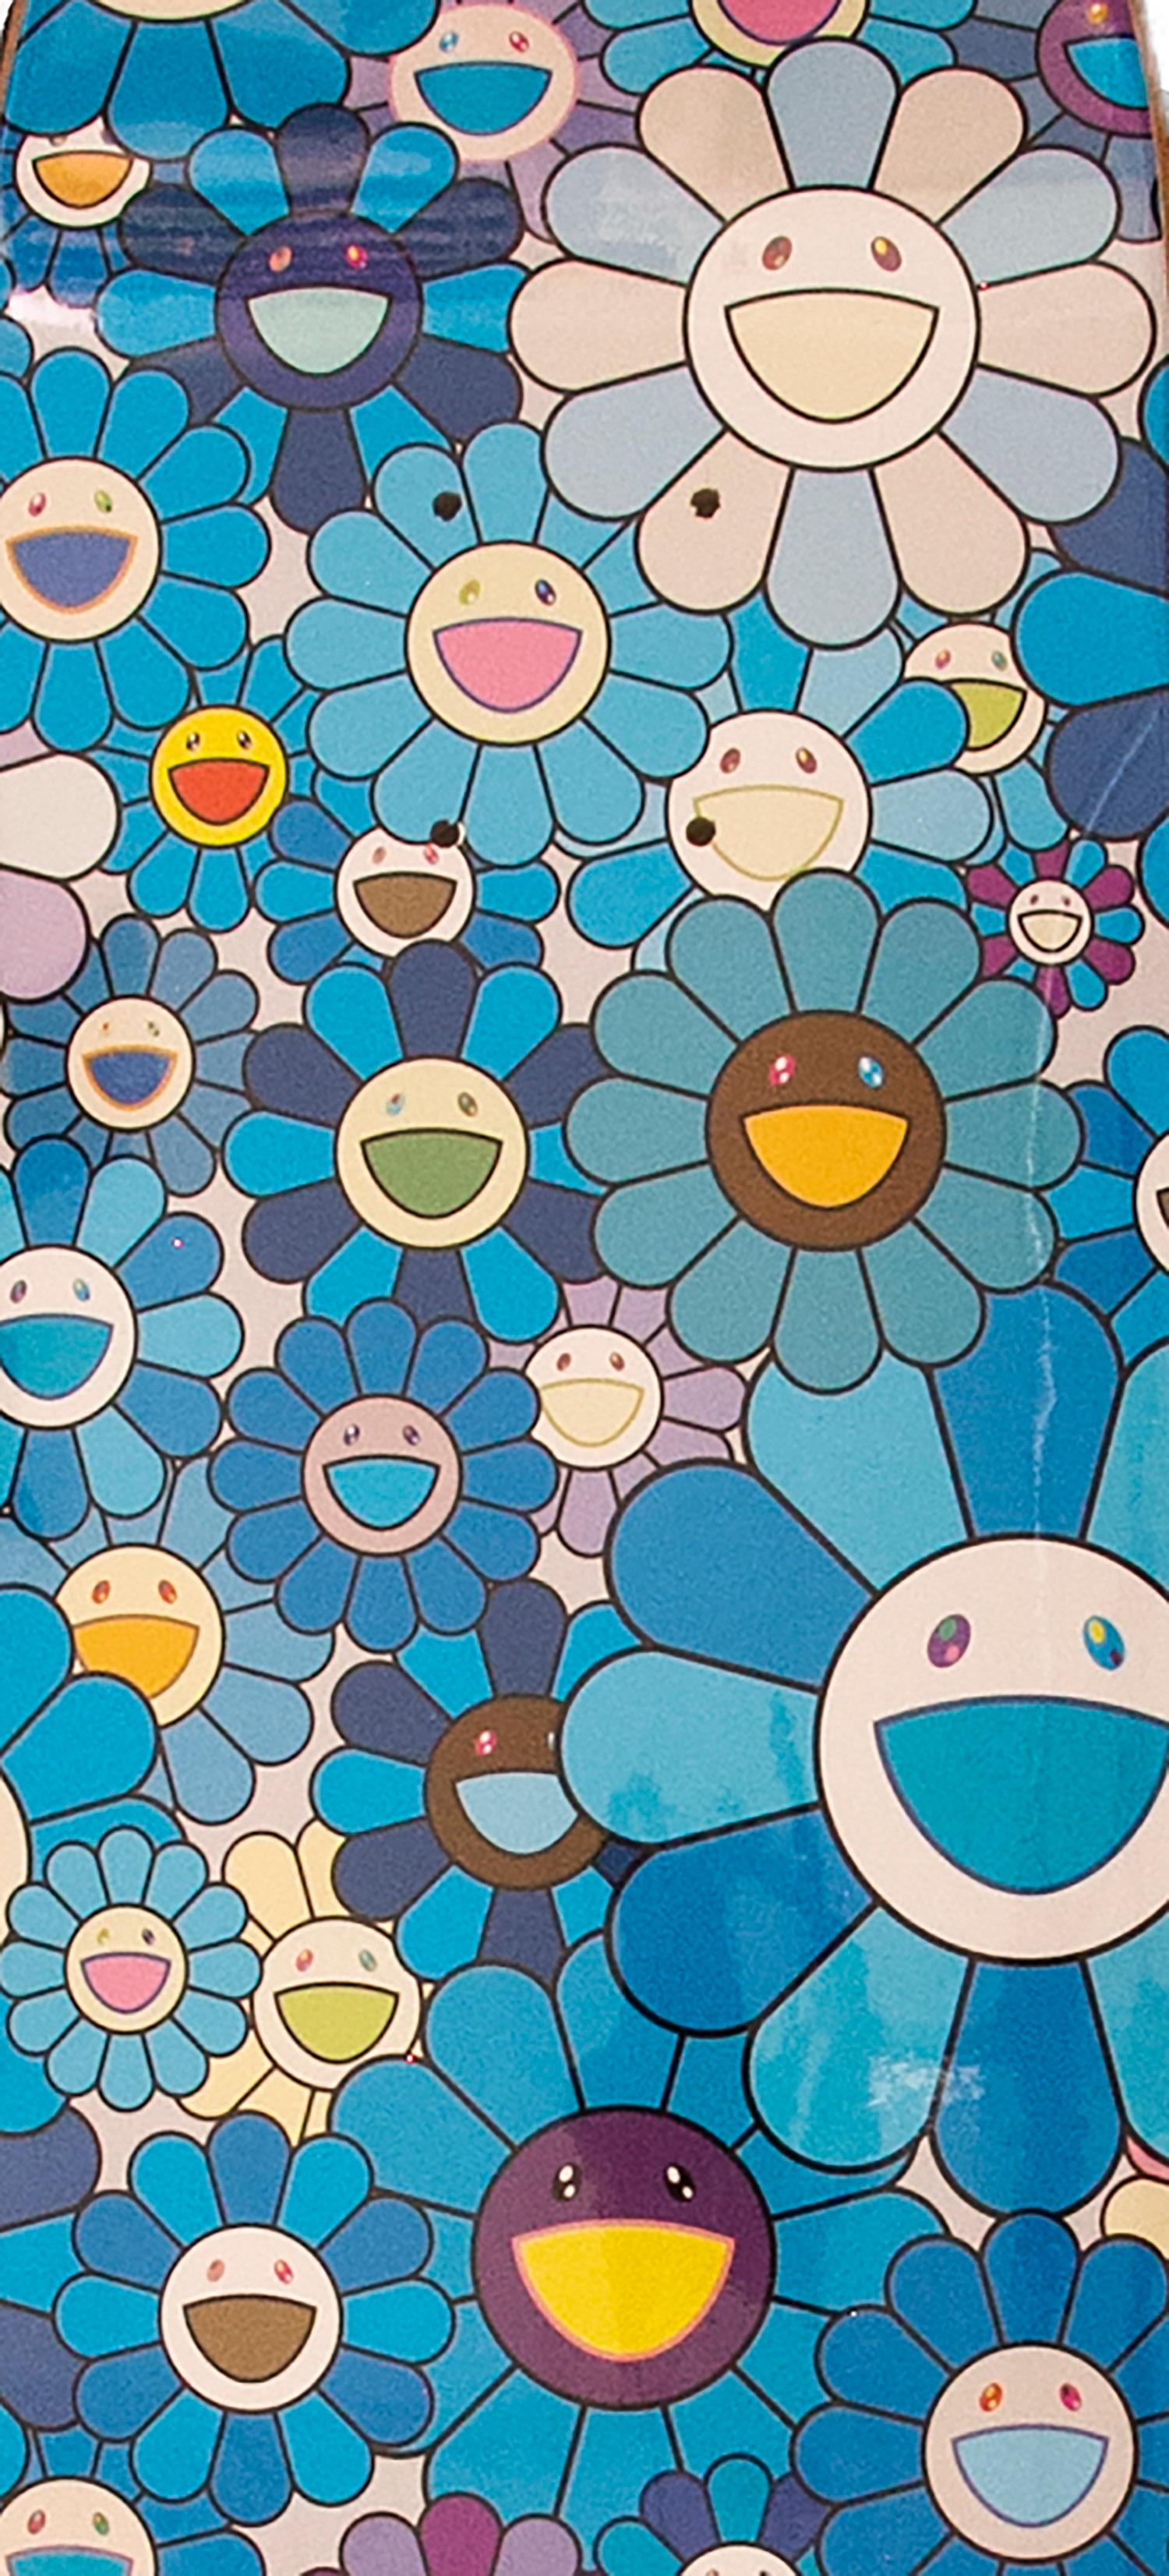 Takashi Murakami x Complexcon Deck 8.0 - Blue Multi Flower 3